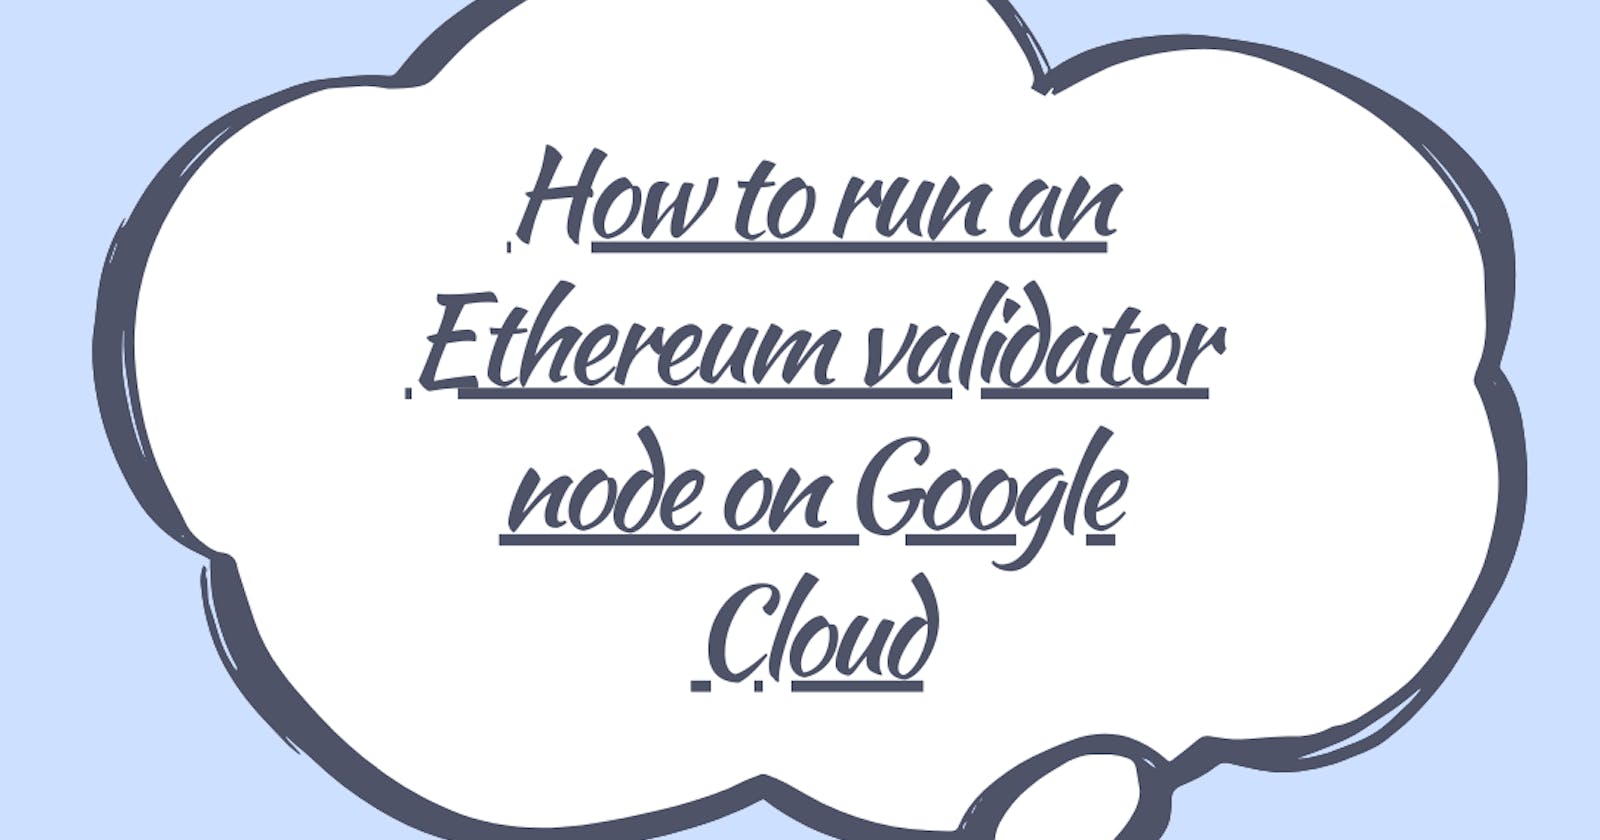 How to run an Ethereum validator node on Google Cloud